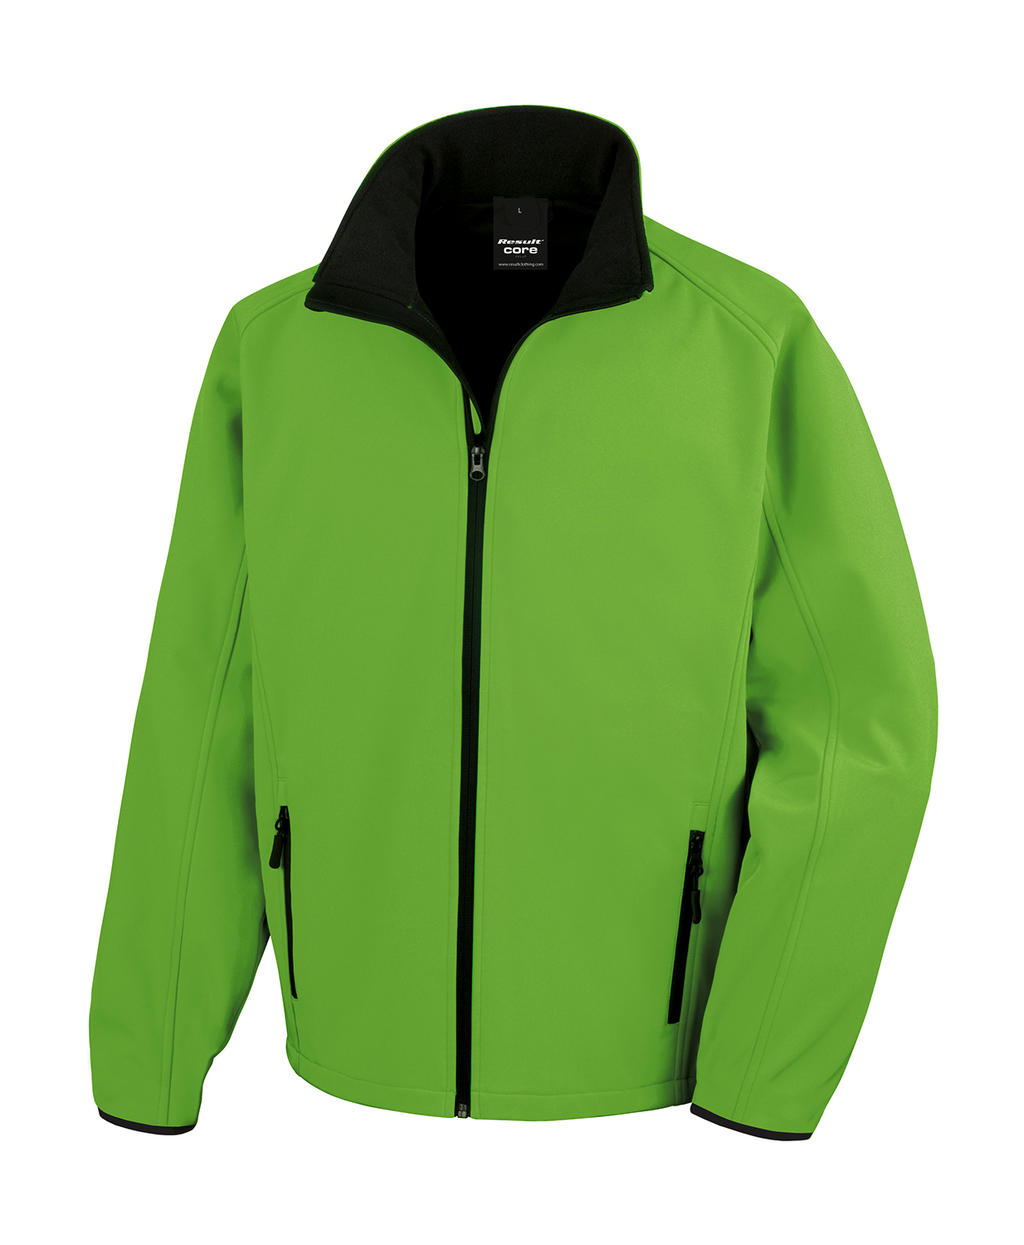  Printable Softshell Jacket in Farbe Vivid Green/Black